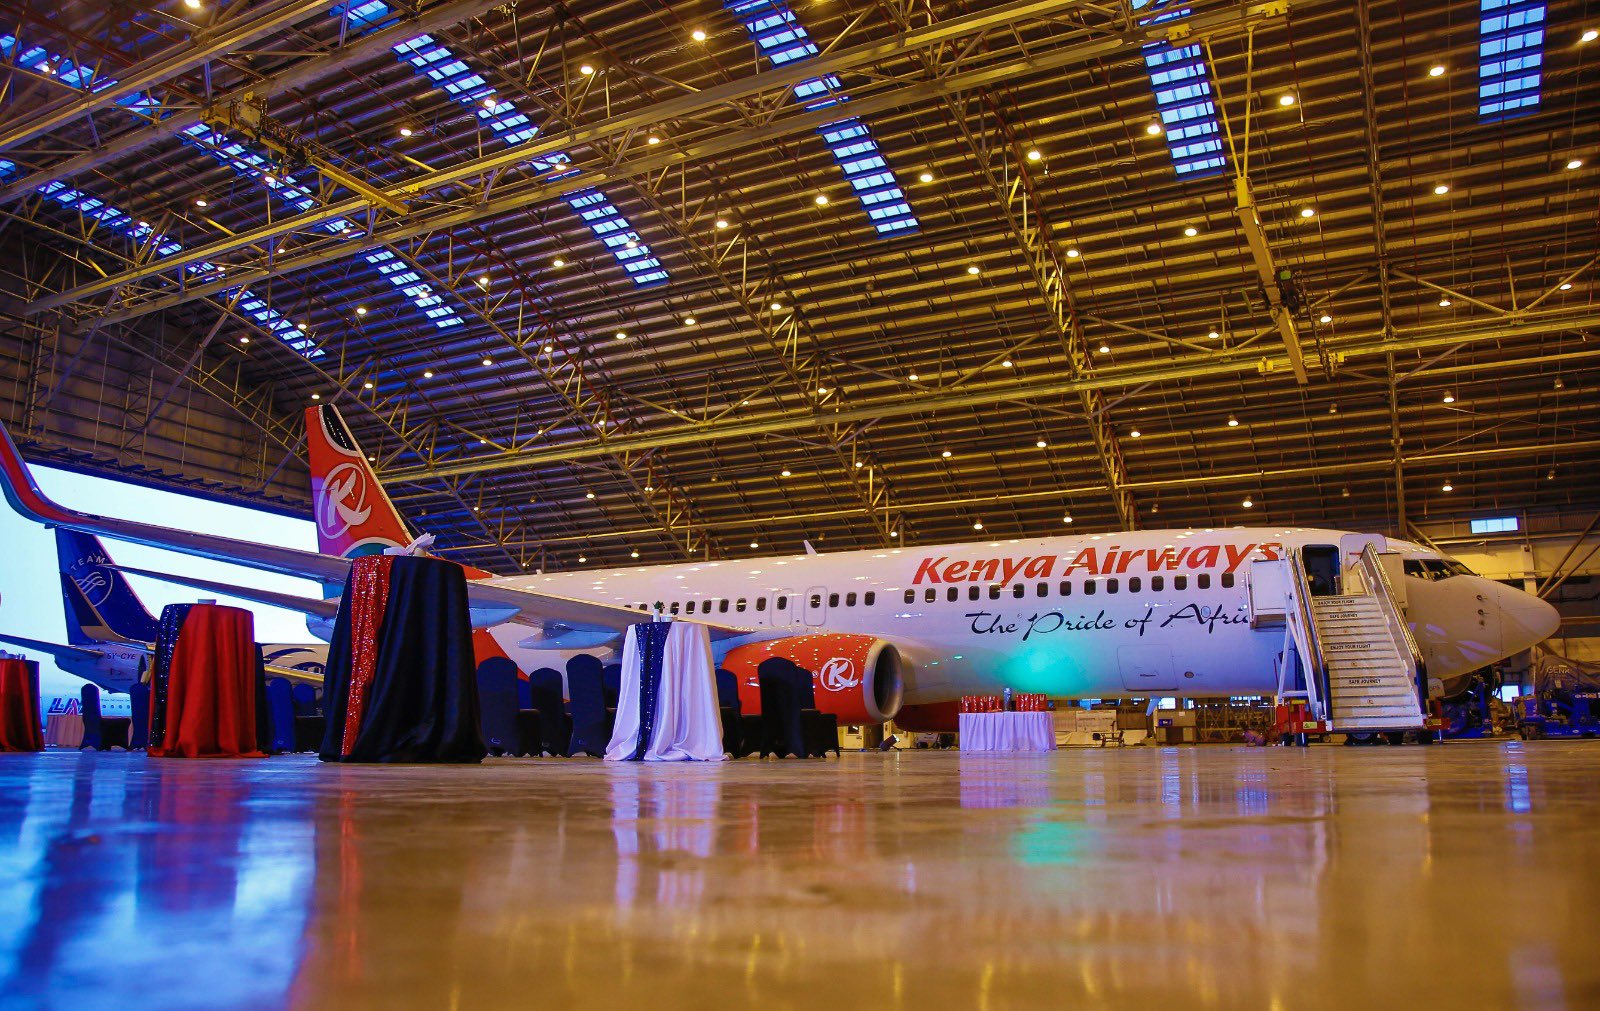 “Kenya Airways Achieves Profit Milestone After Four-Year Gap”